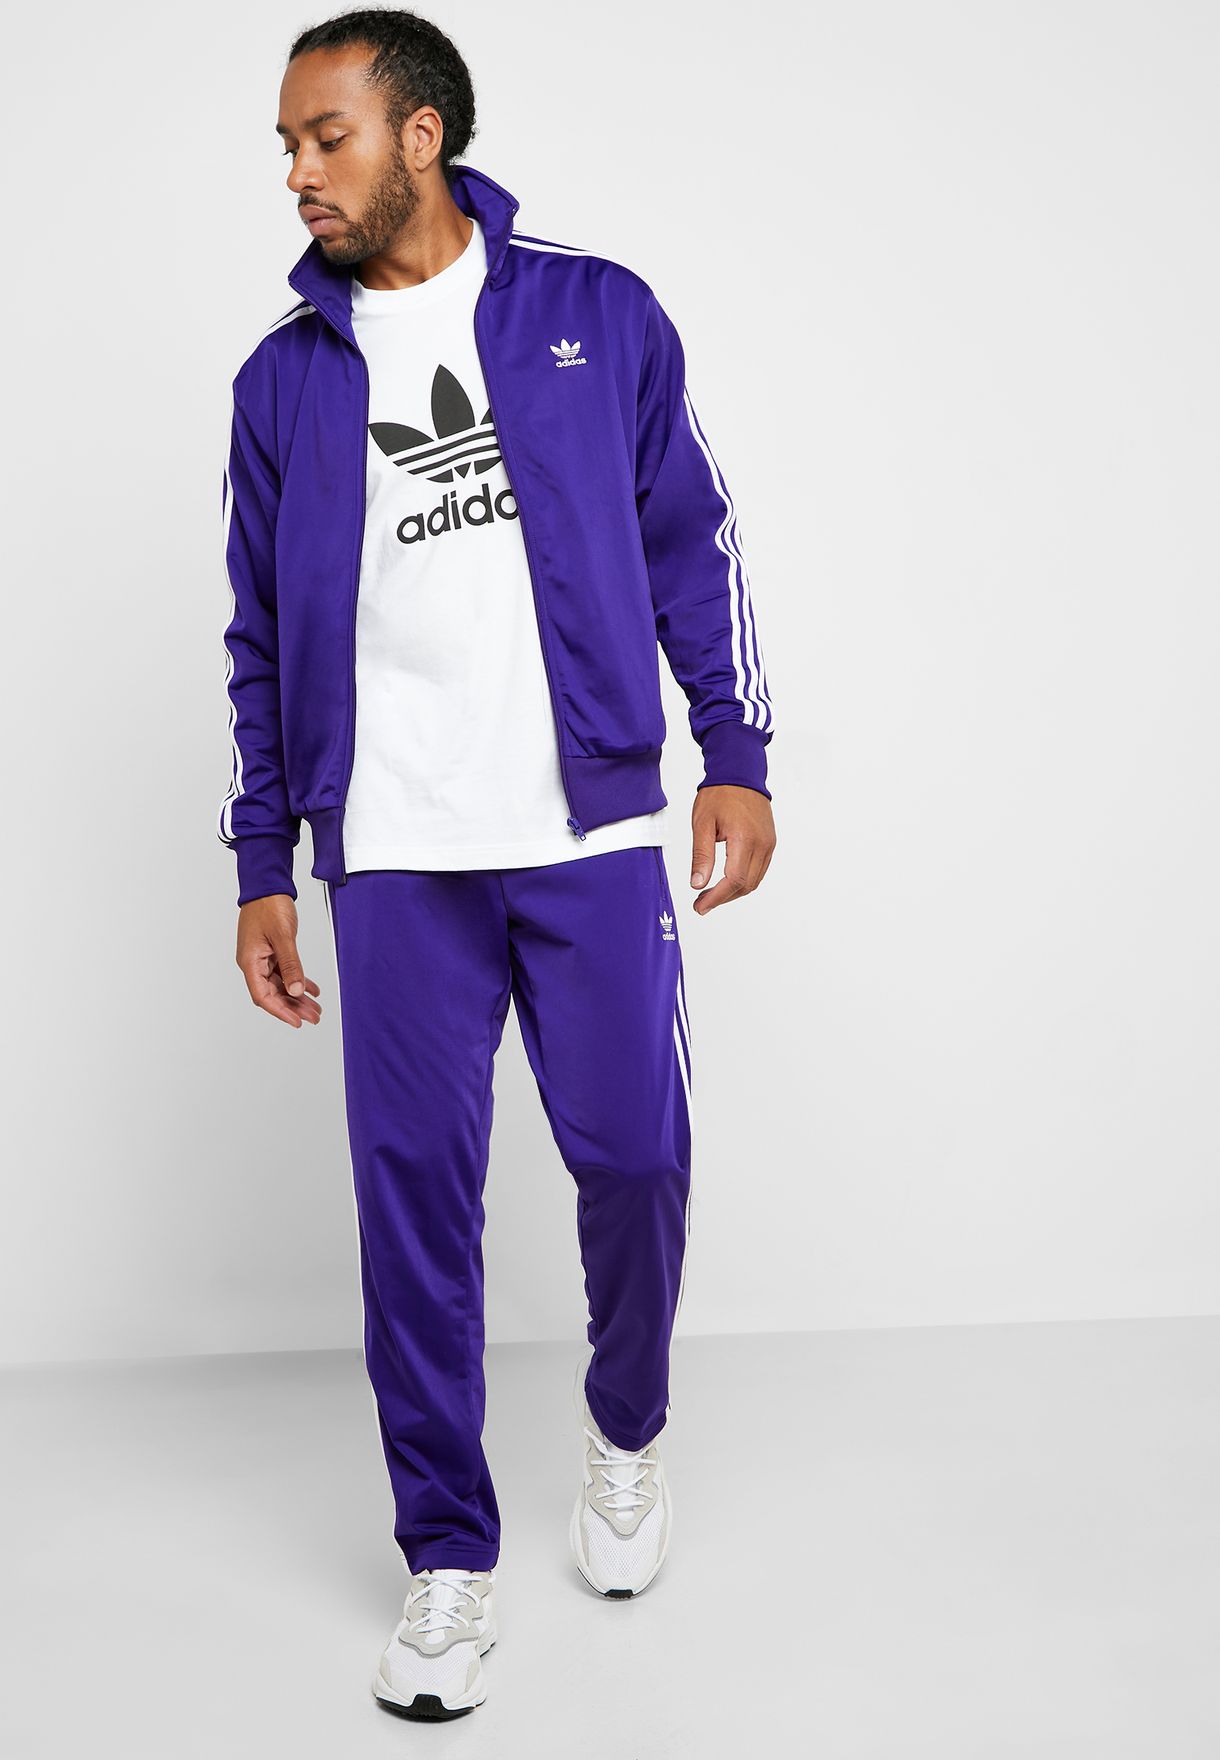 adidas tracksuit lavender